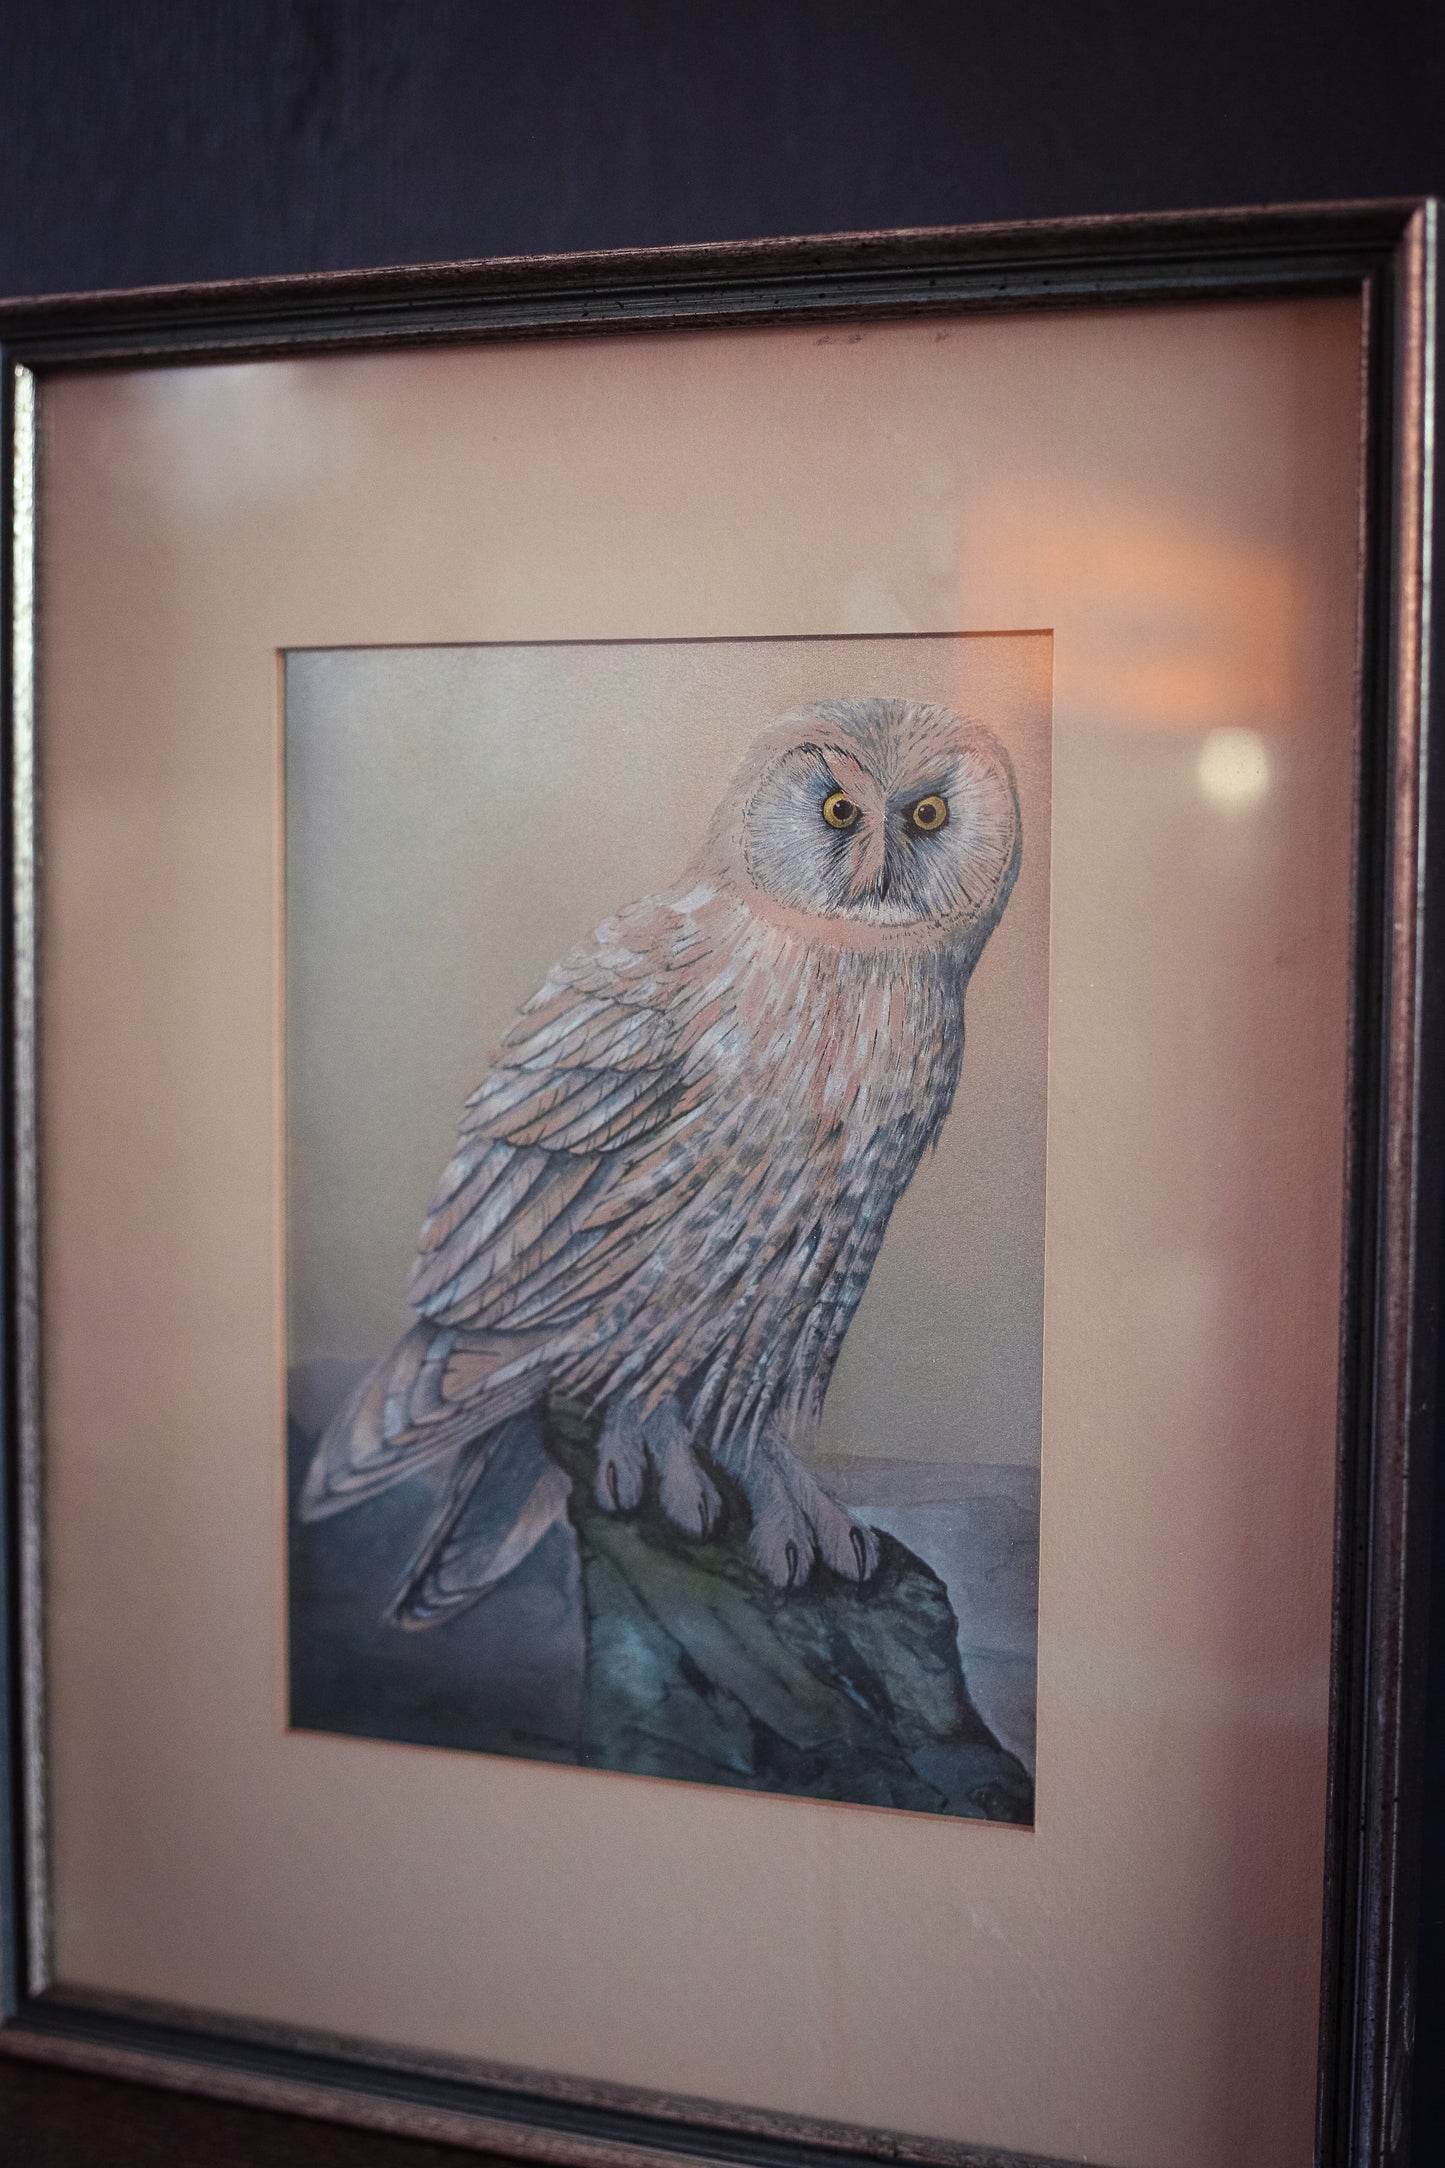 Silver Framed Metallic Owl Art - Vintage Framed Owl Print with Holographic Metallic Details